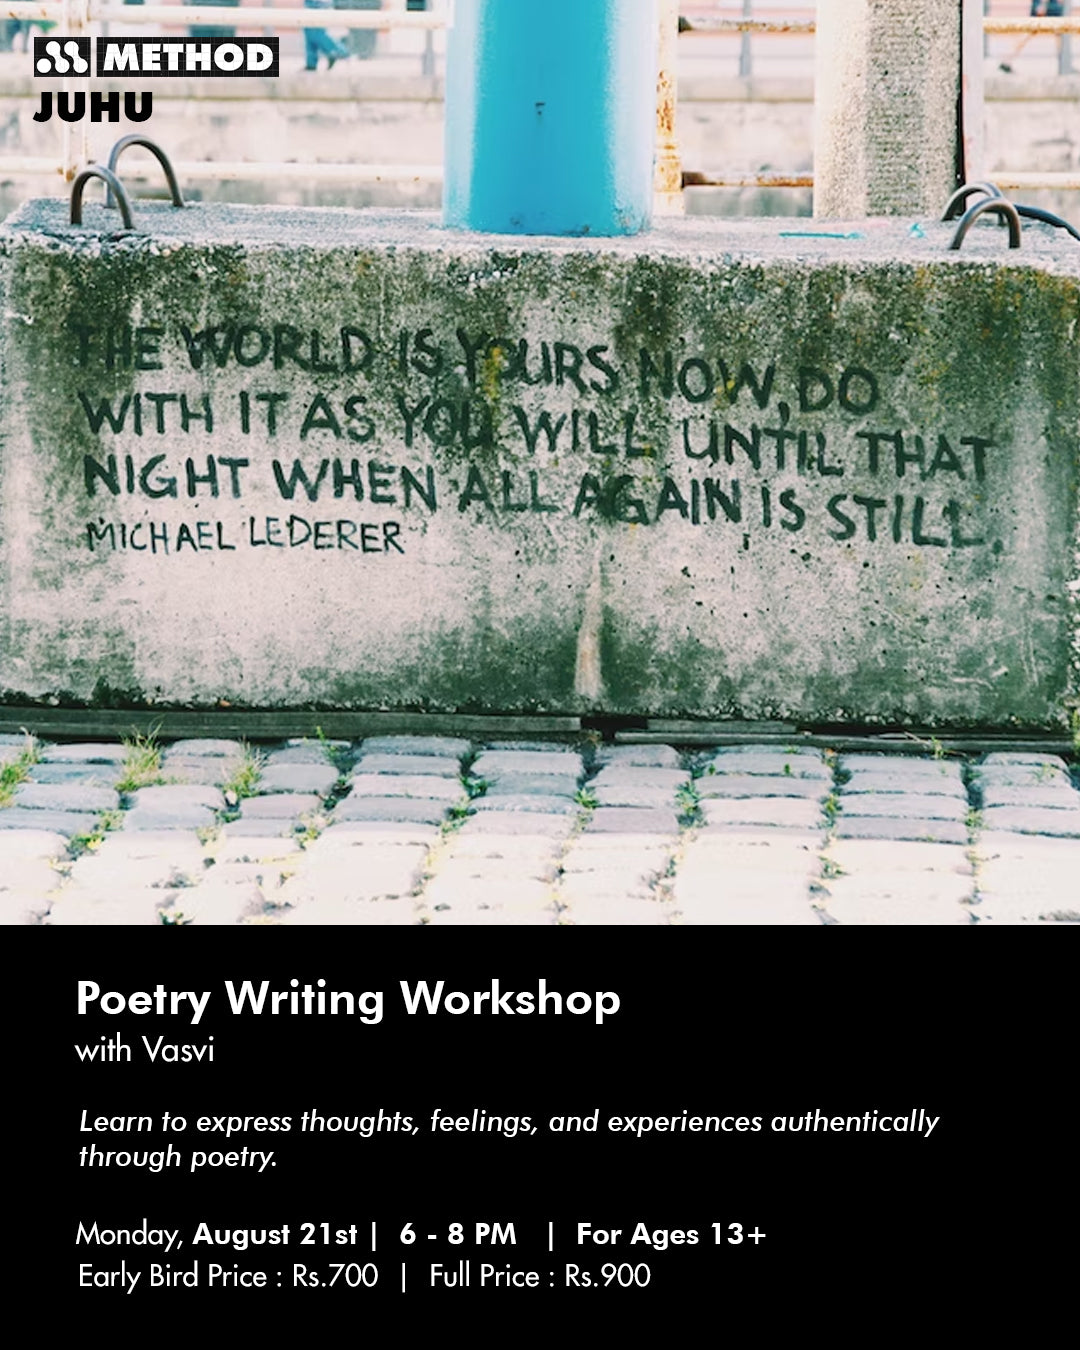 Build Your Self-Portrait: A Generative Poem Writing Workshop with Vasvi | Aug 21 | Workshop | Method Juhu